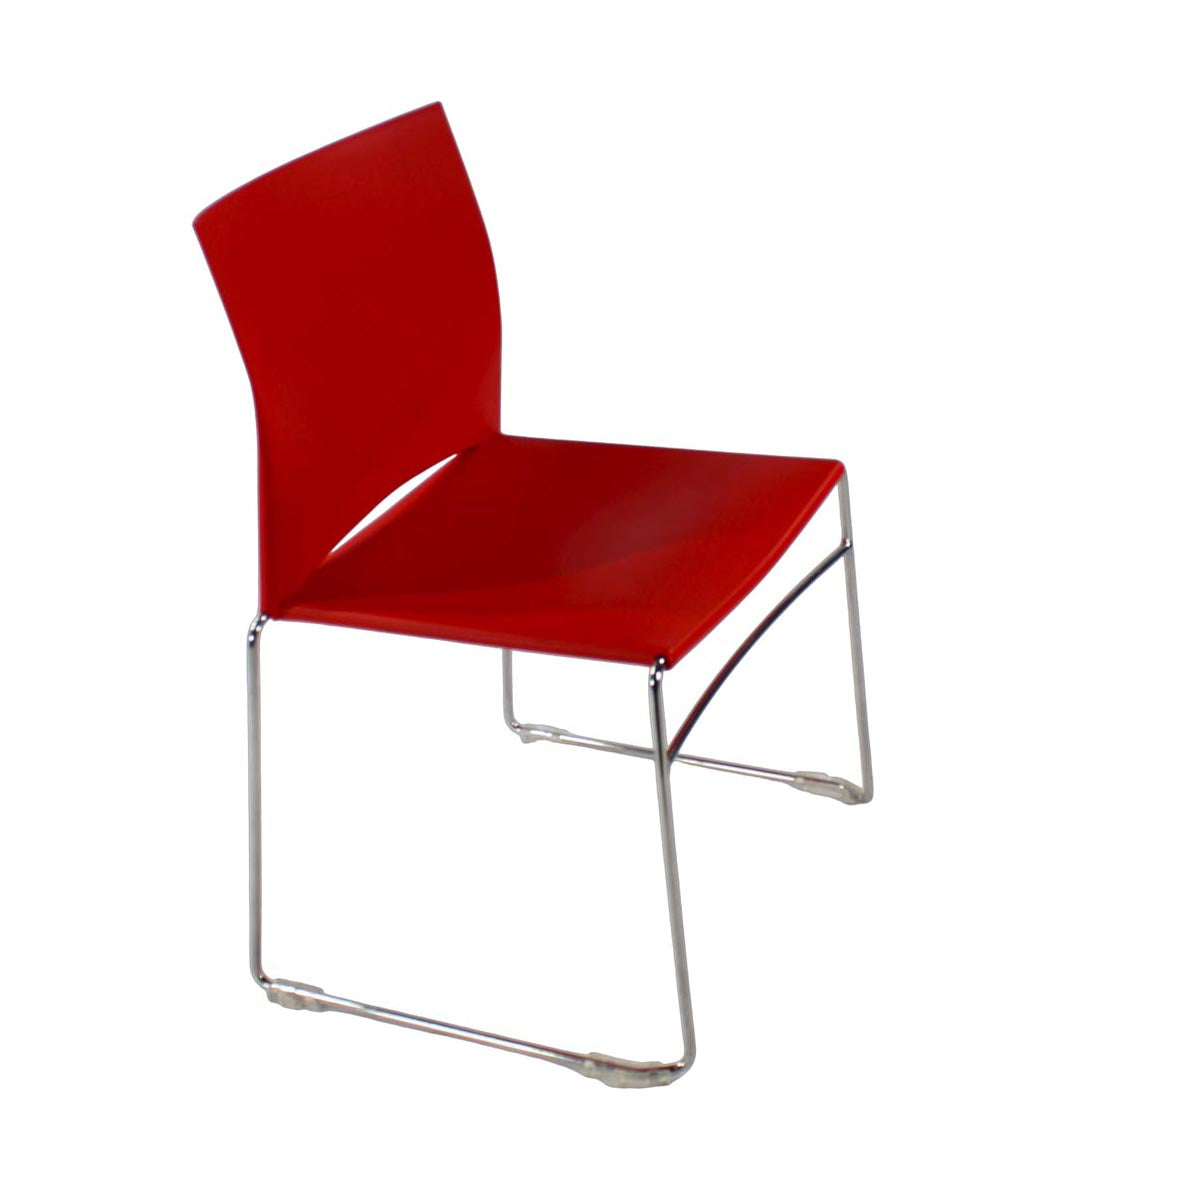 Herman Miller: sedia impilabile Pronta rossa - rinnovata